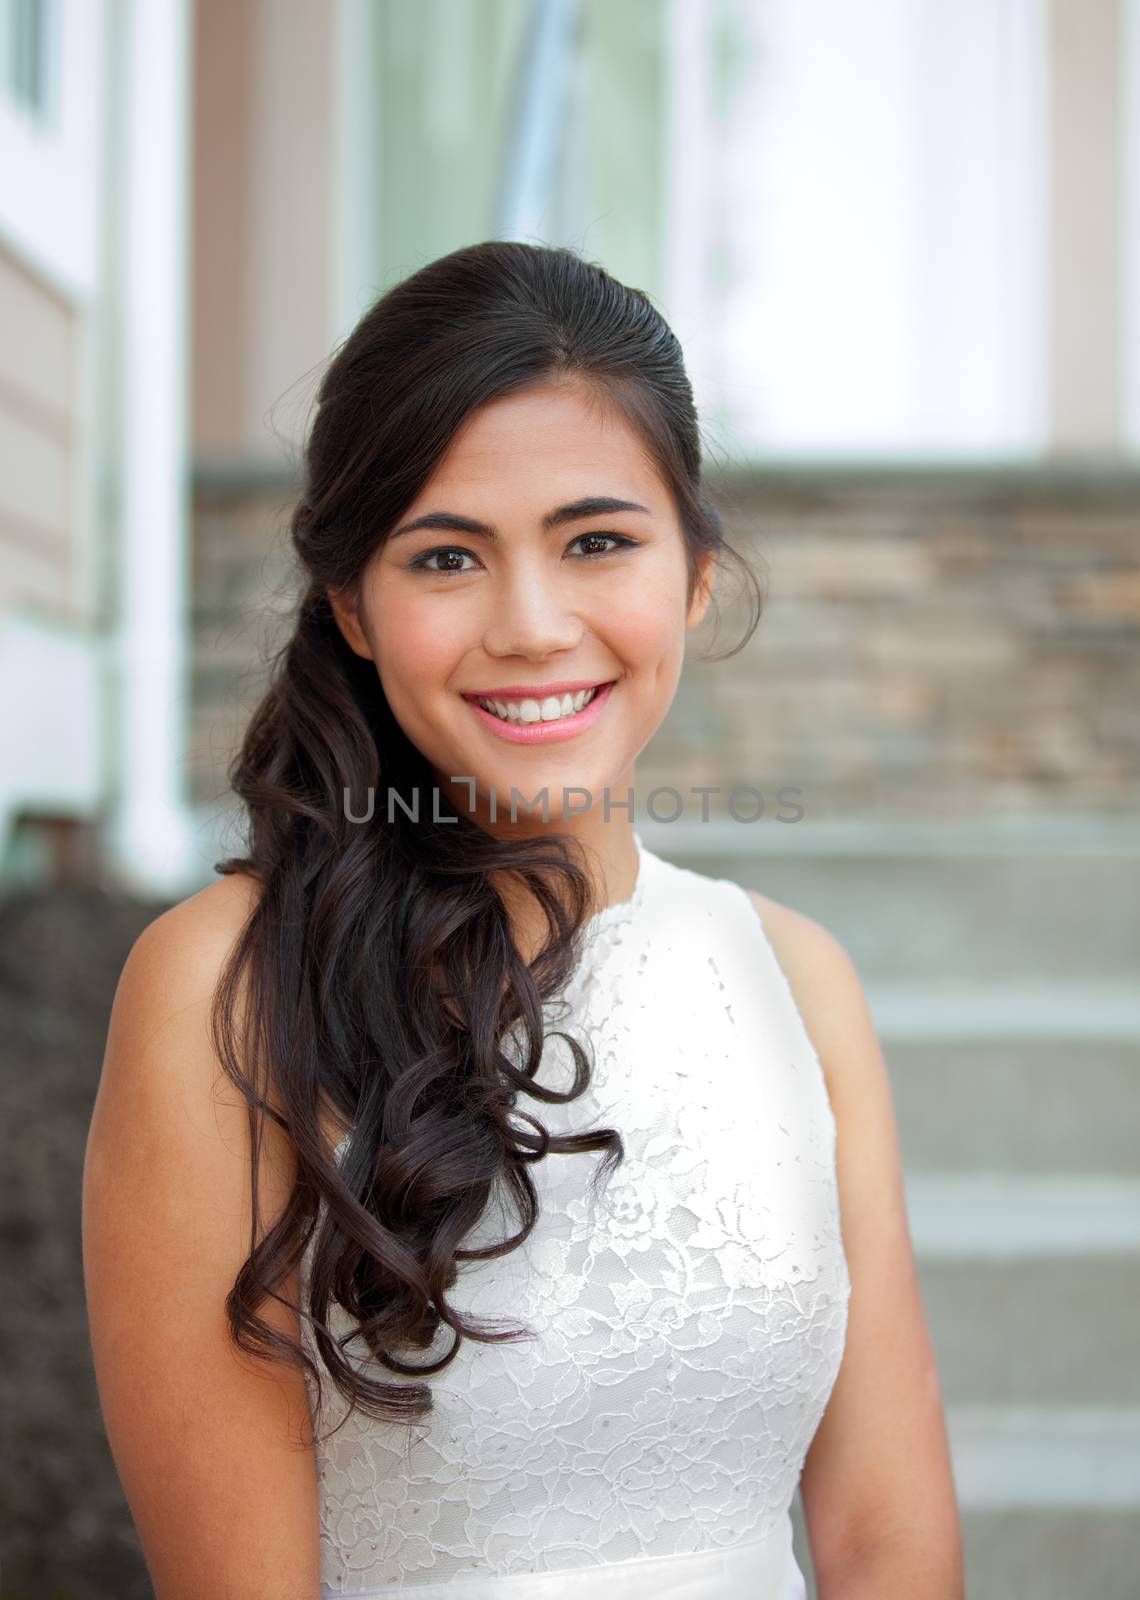 Beautiful biracial bride in white lace wedding dress, smiling outdoors